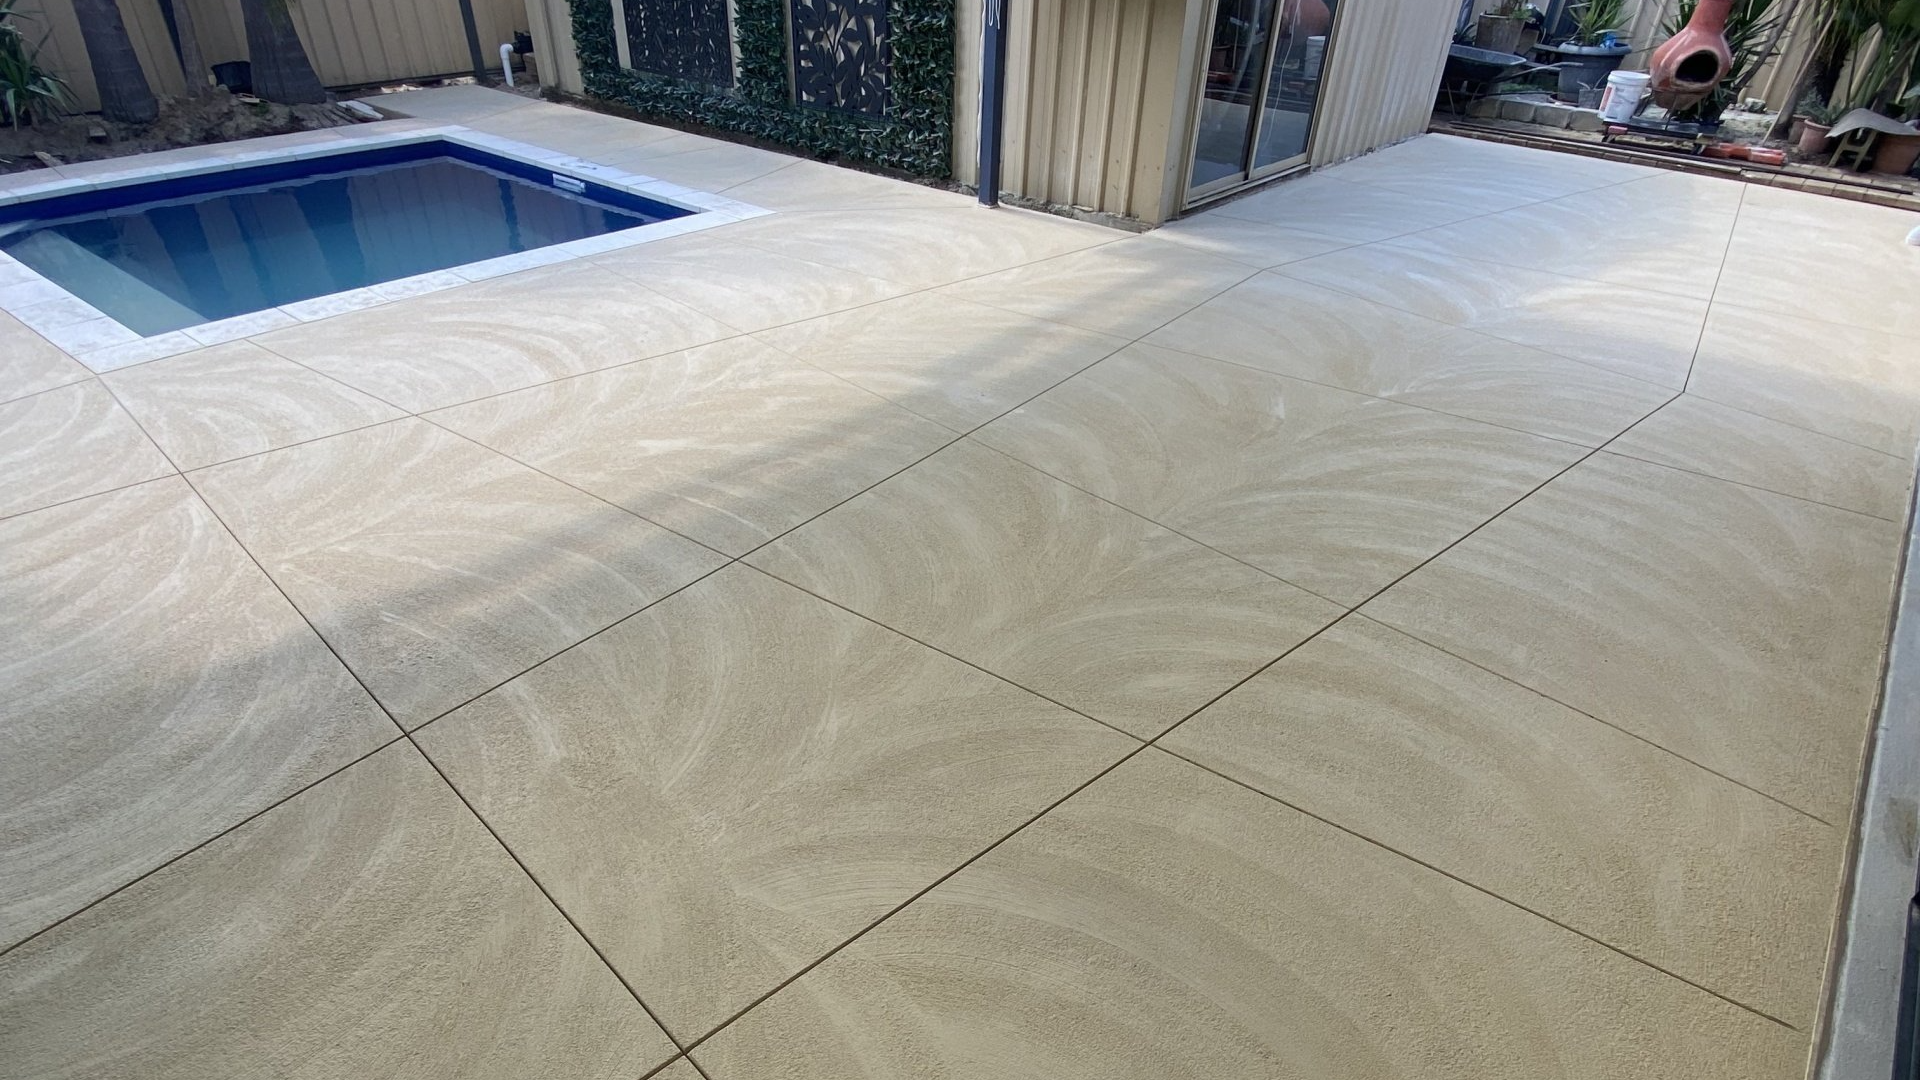 Liquid limestone around pool and under patio